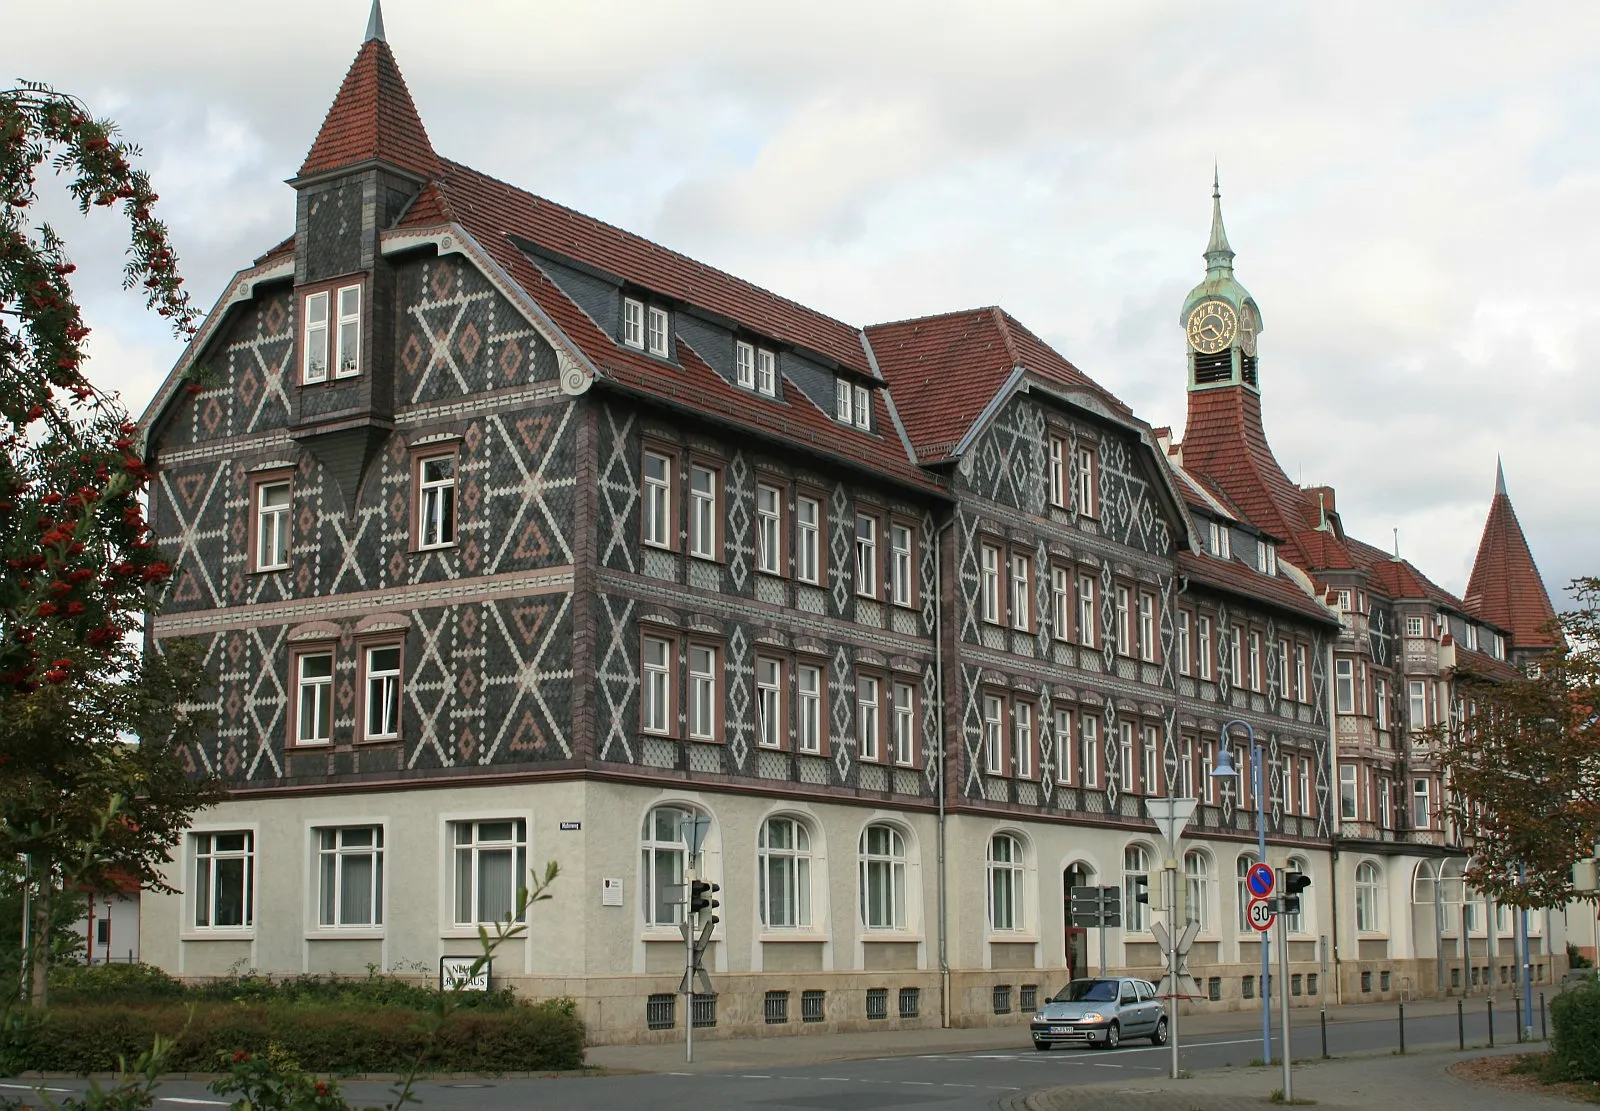 Image of Einbeck